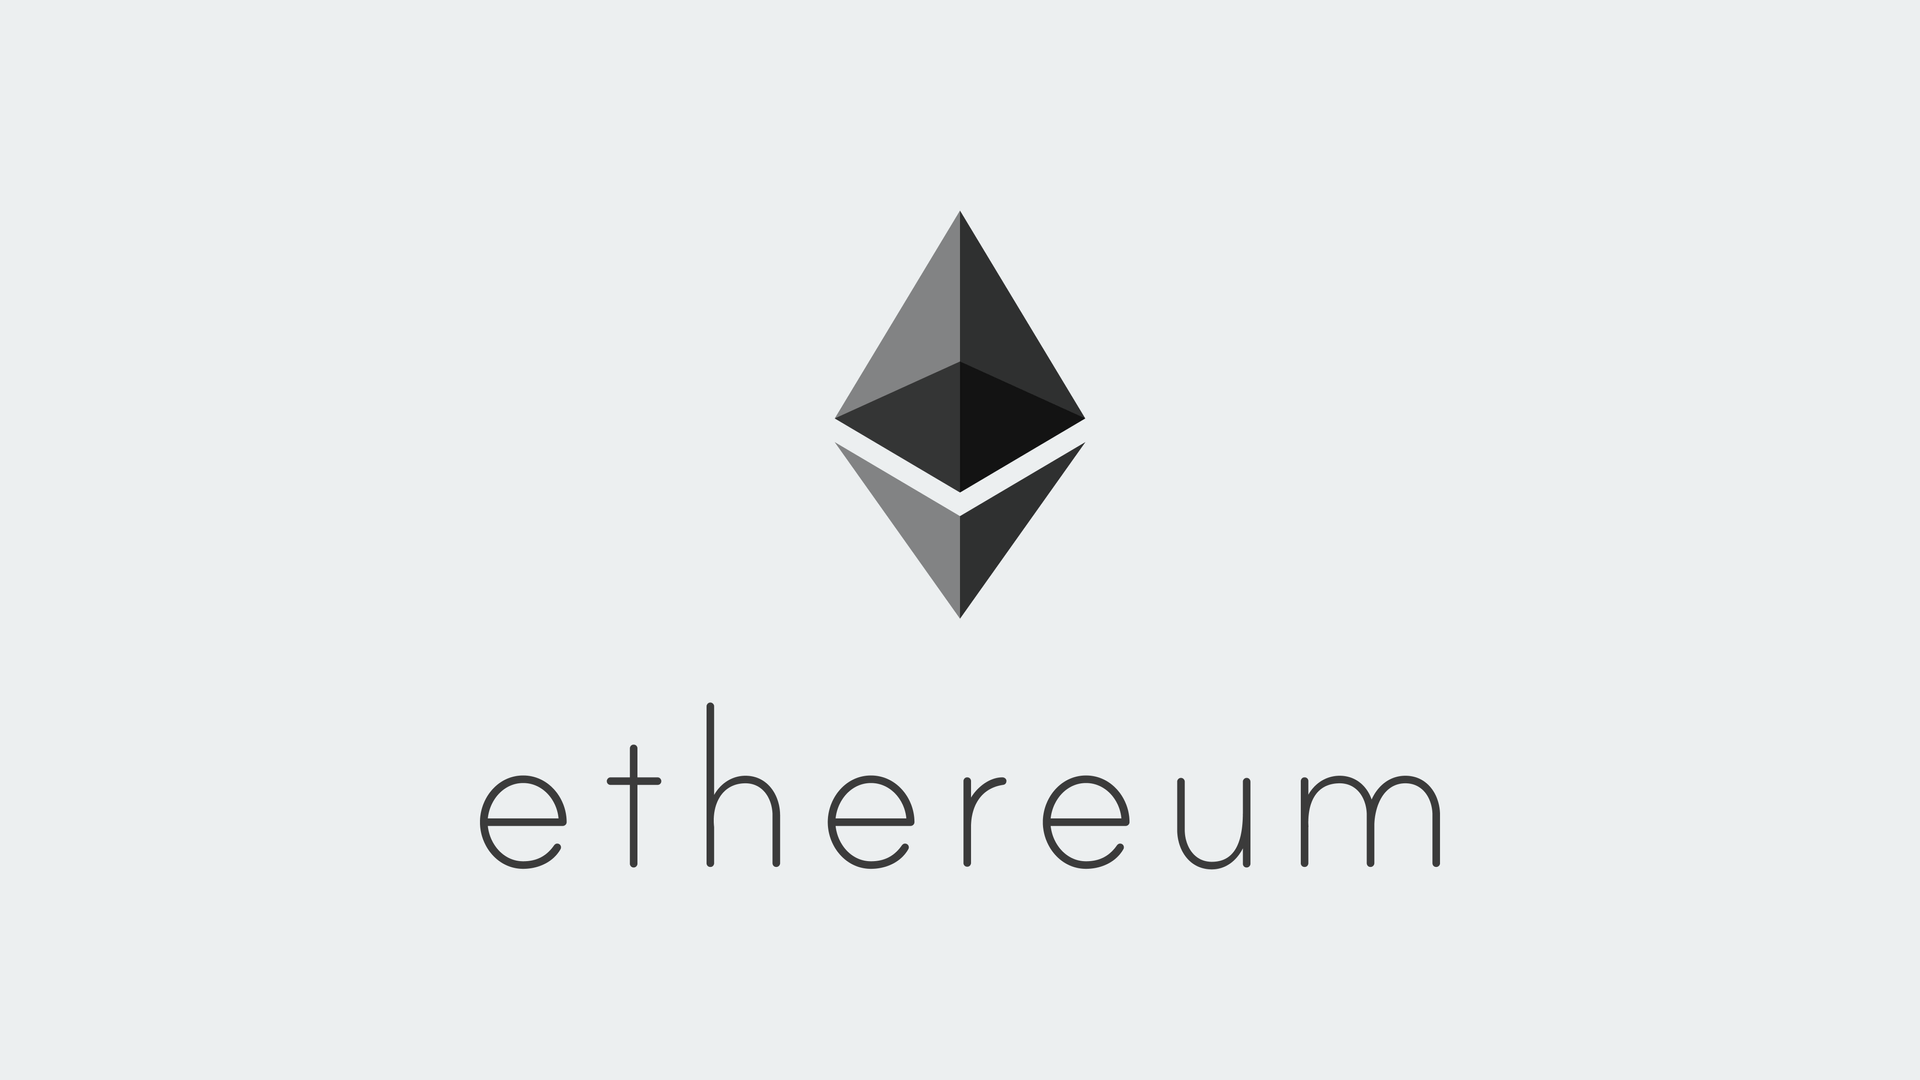 ethereum-logo-portrait-black-gray